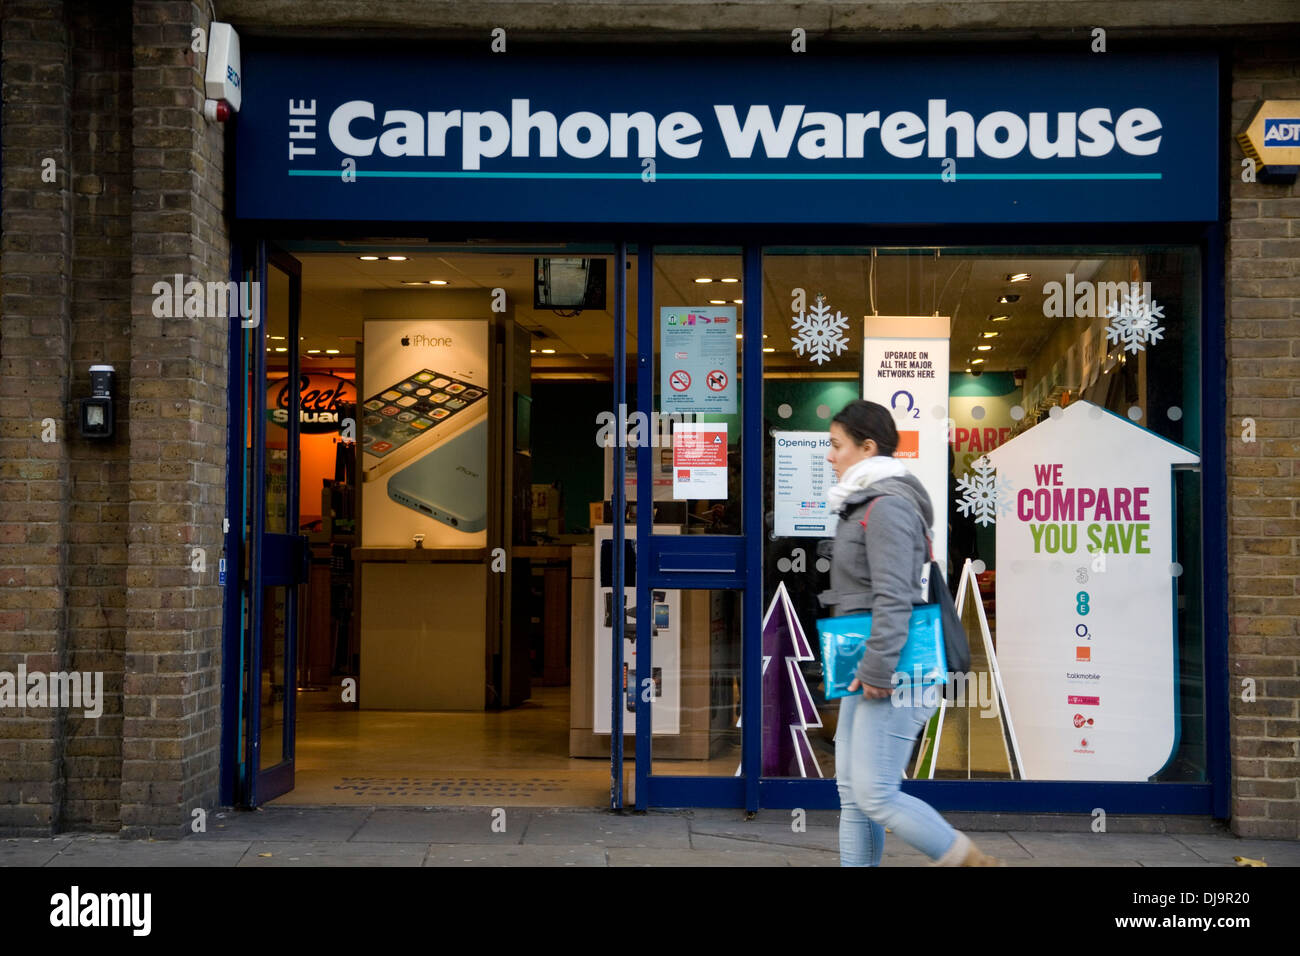 Carphone Warehouse shop front on high street, Islington Stock Photo